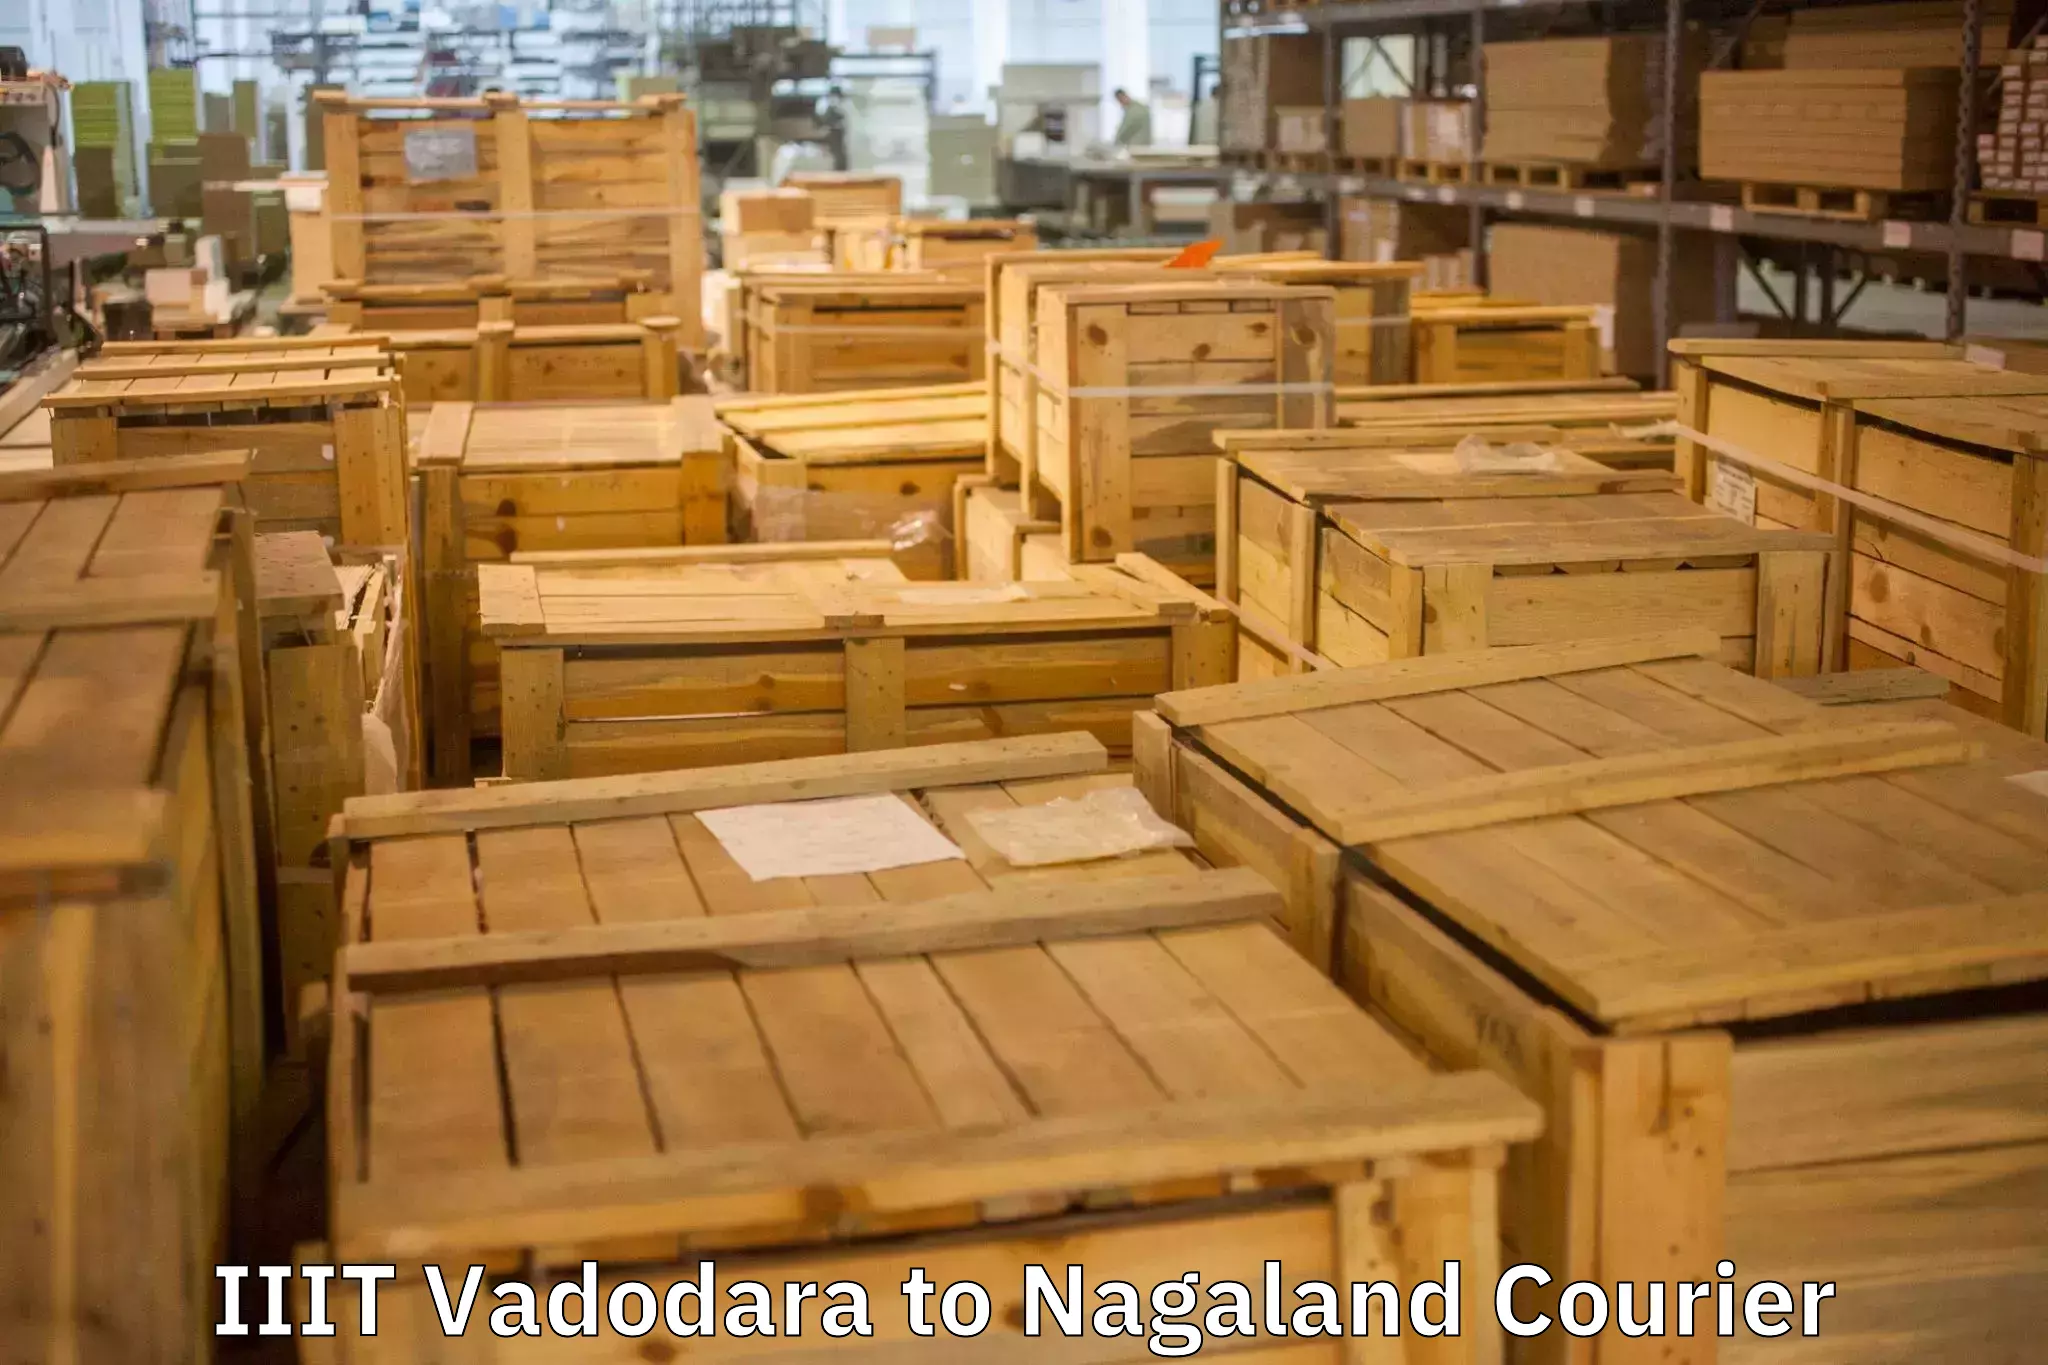 Seamless moving process IIIT Vadodara to Nagaland